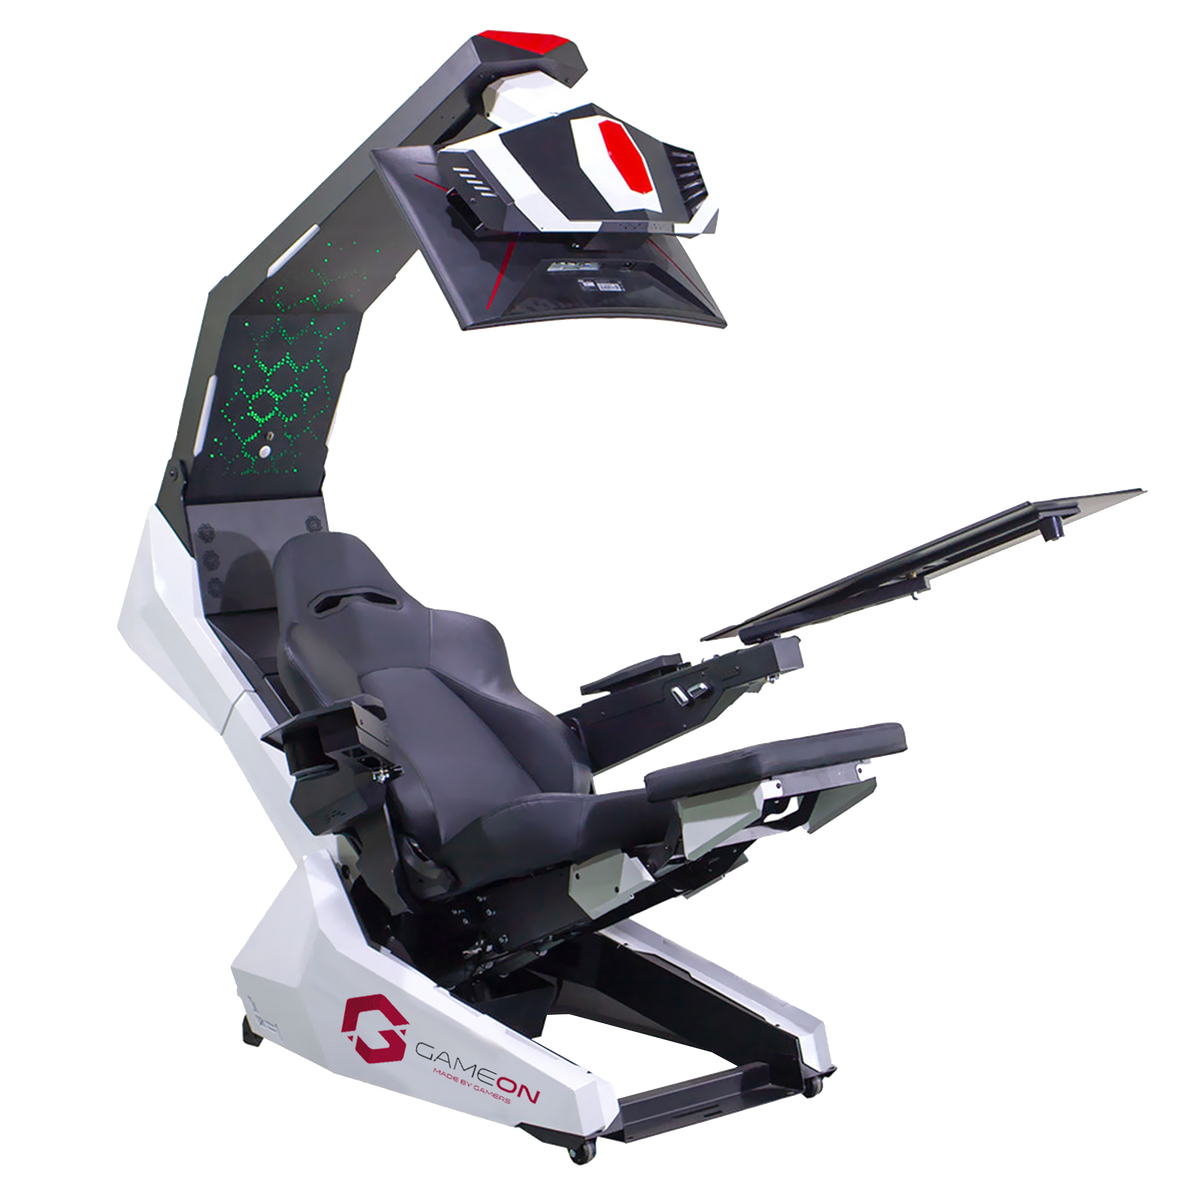 GAMEON IW-R1-PRO Zero Gravity Reclining Computer Workstation Gaming Simulator Chair/Cockpit – White